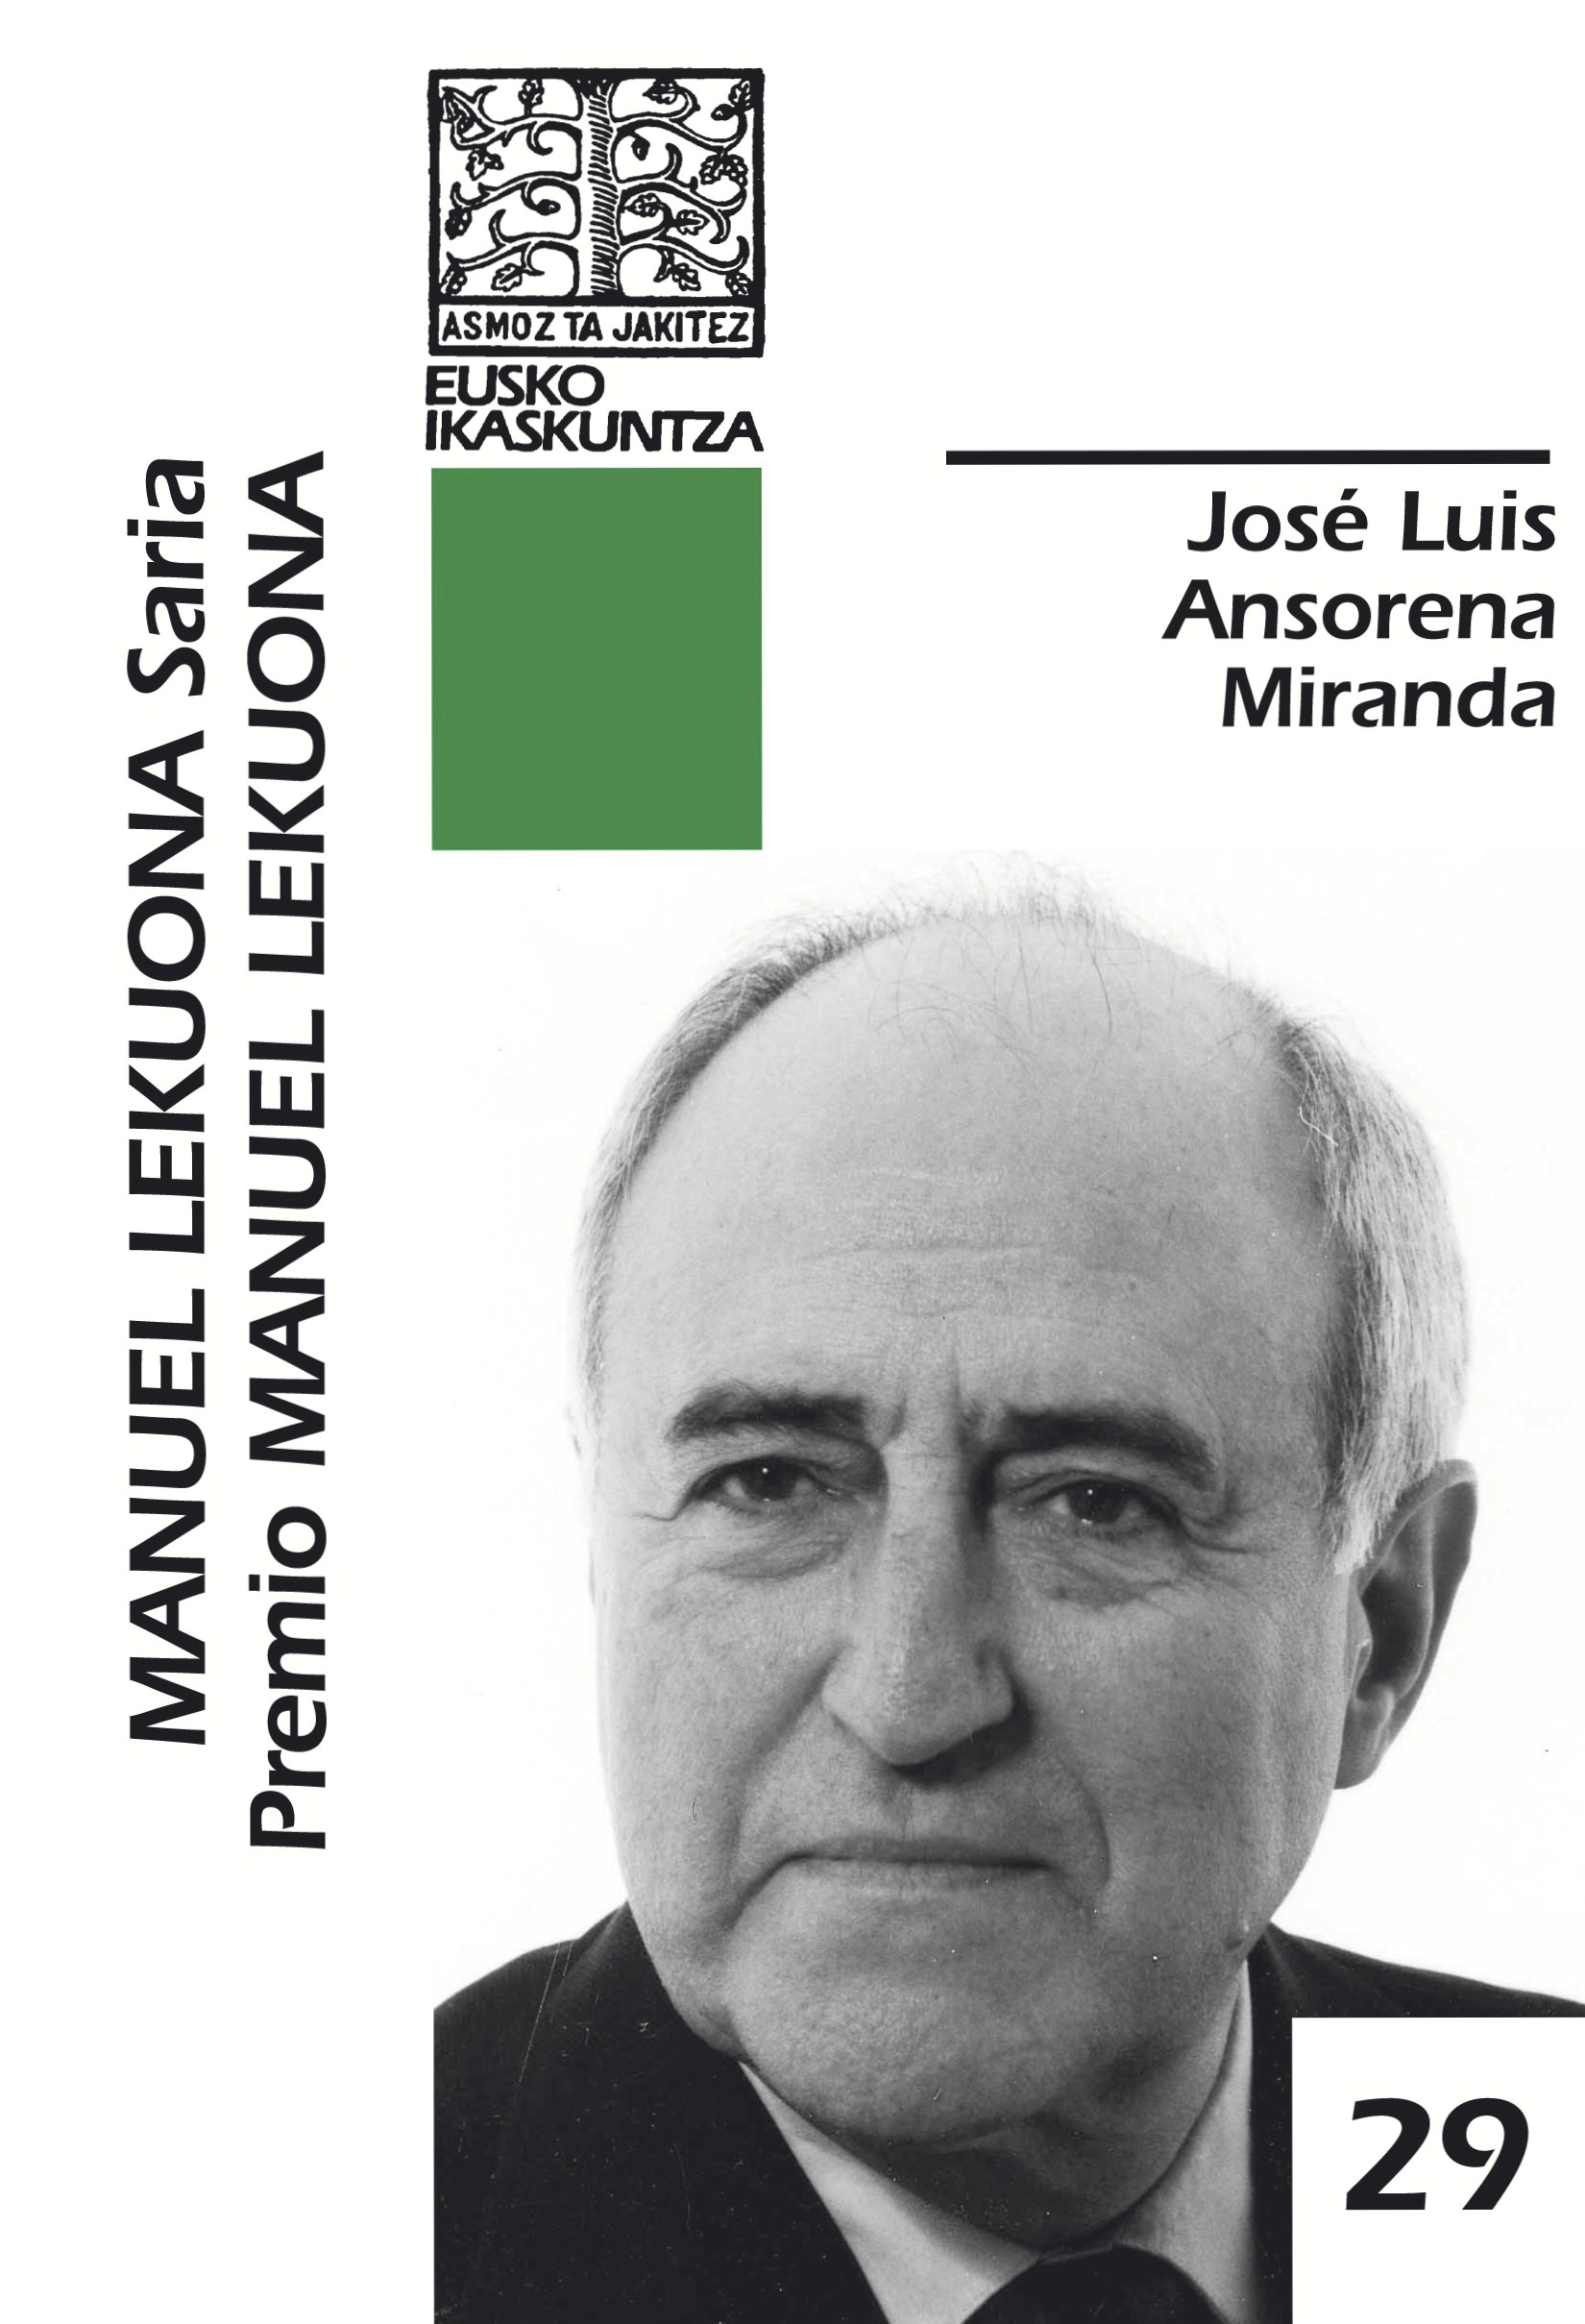 José Luis Ansorena Miranda